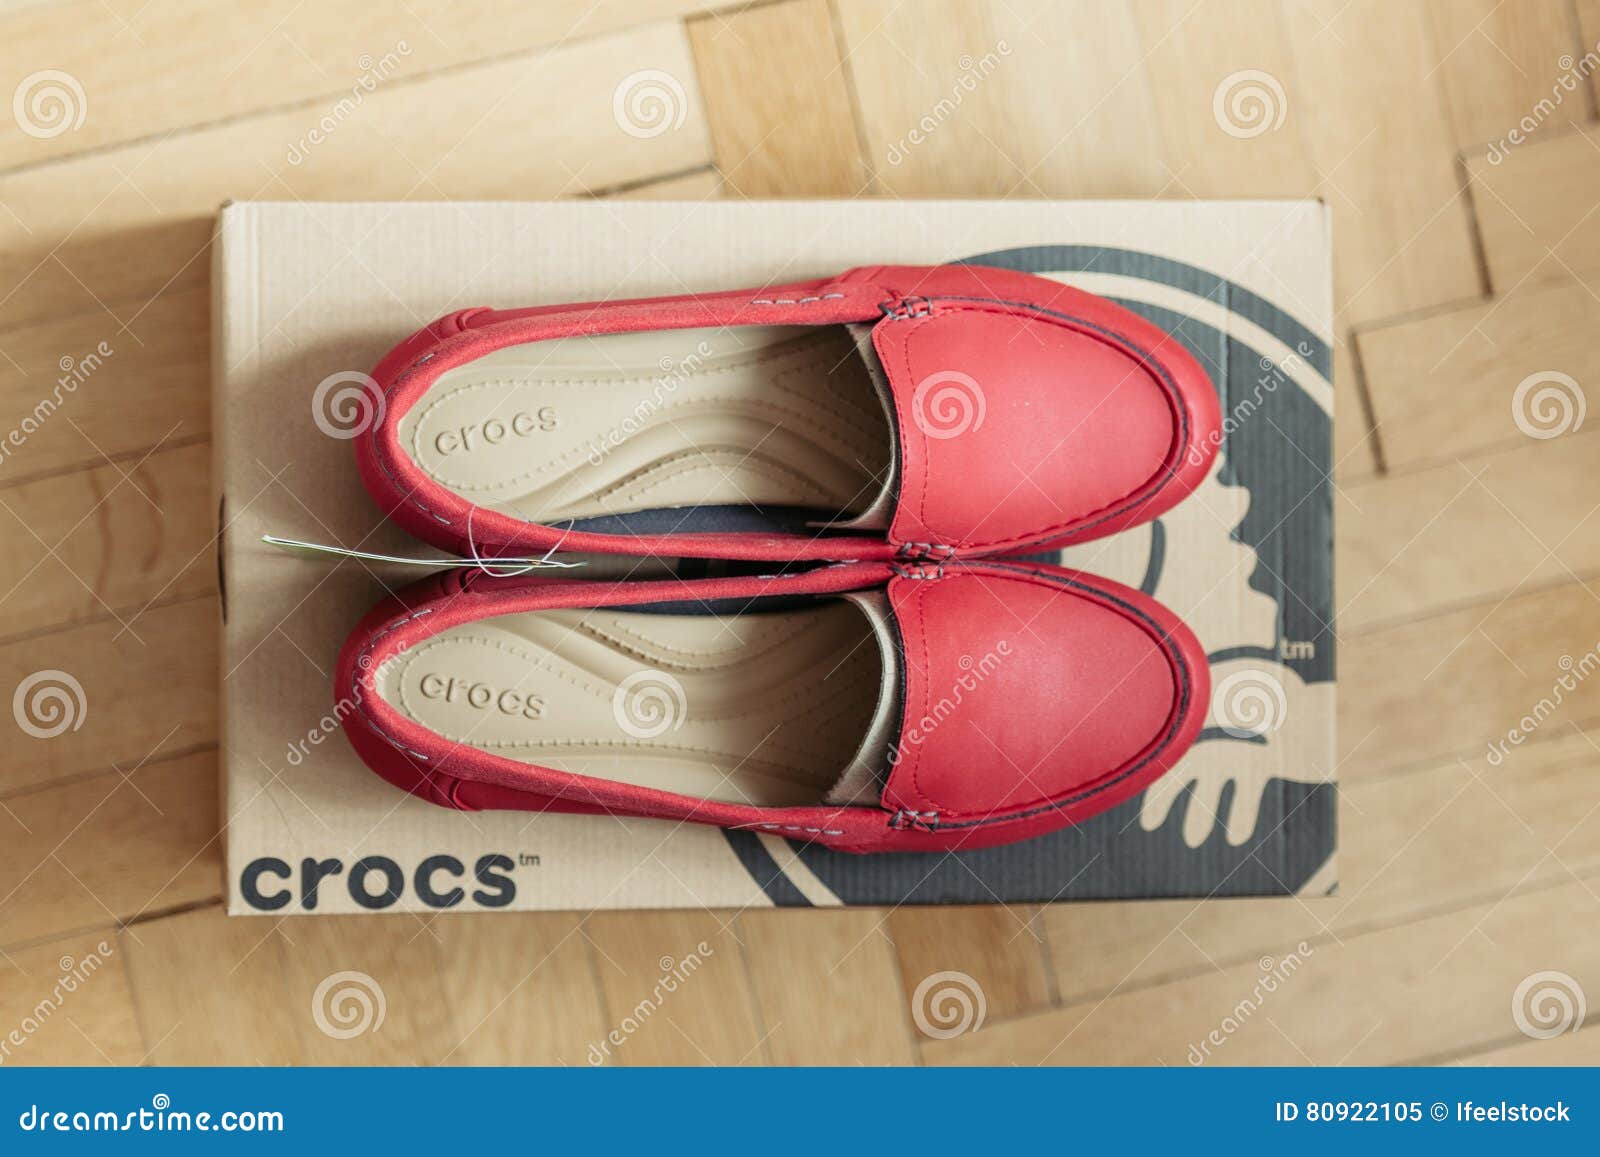 wooden crocs